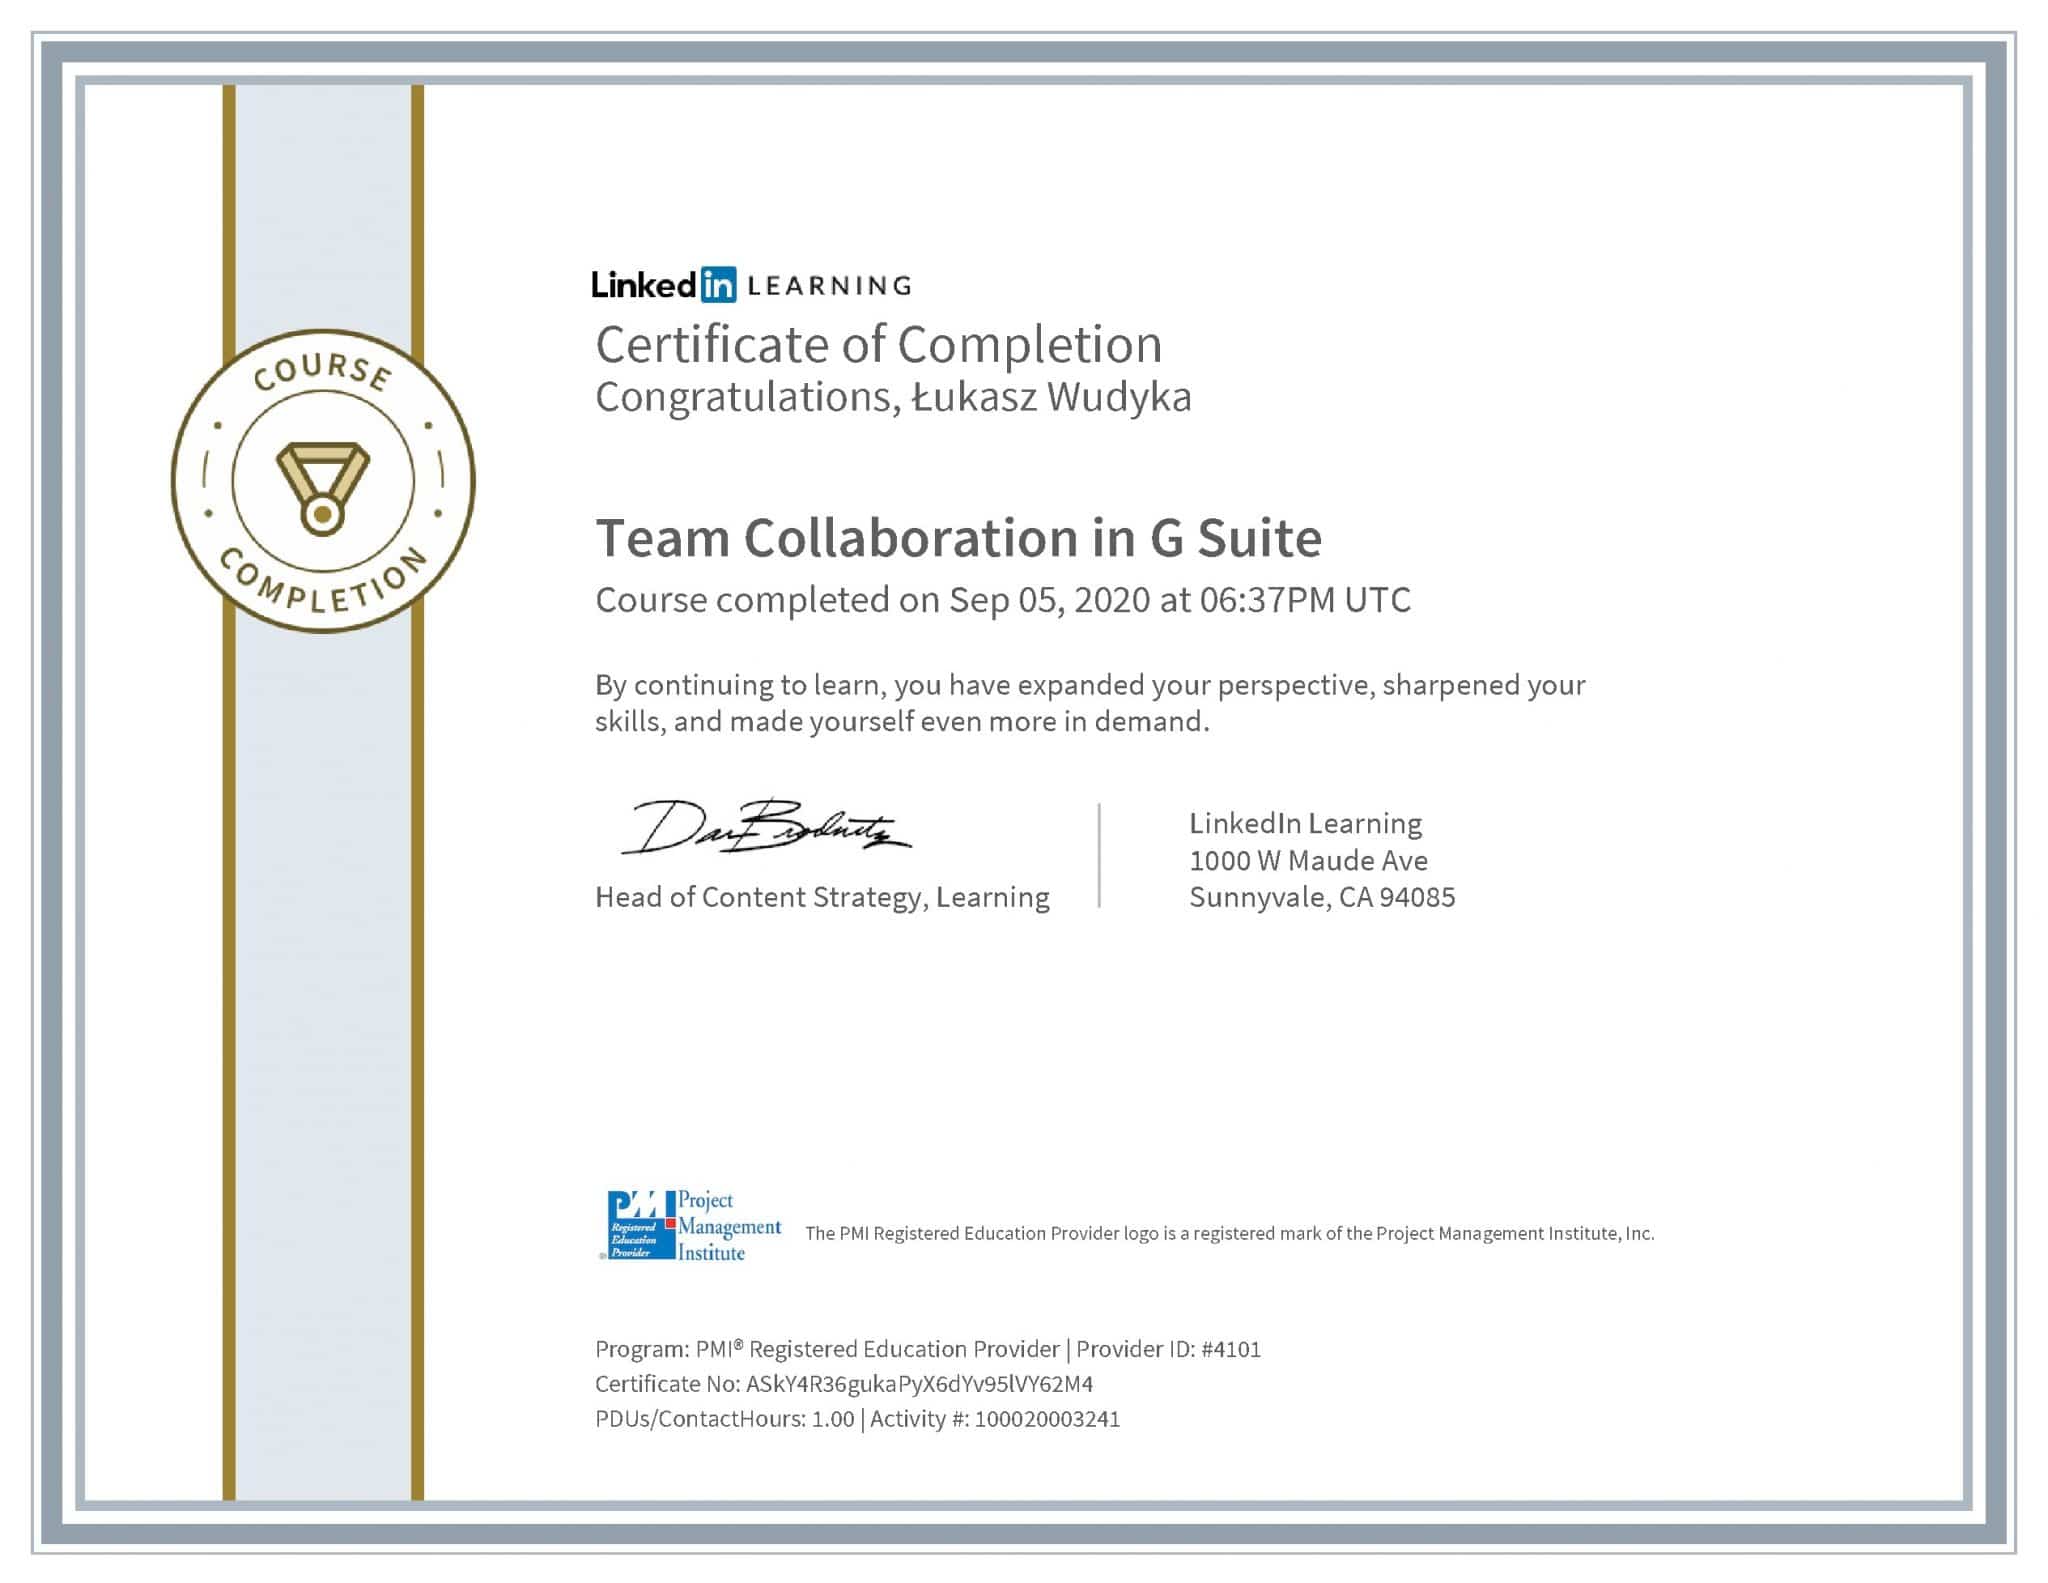 Łukasz Wudyka certyfikat LinkedIn Team Collaboration in G Suite PMI